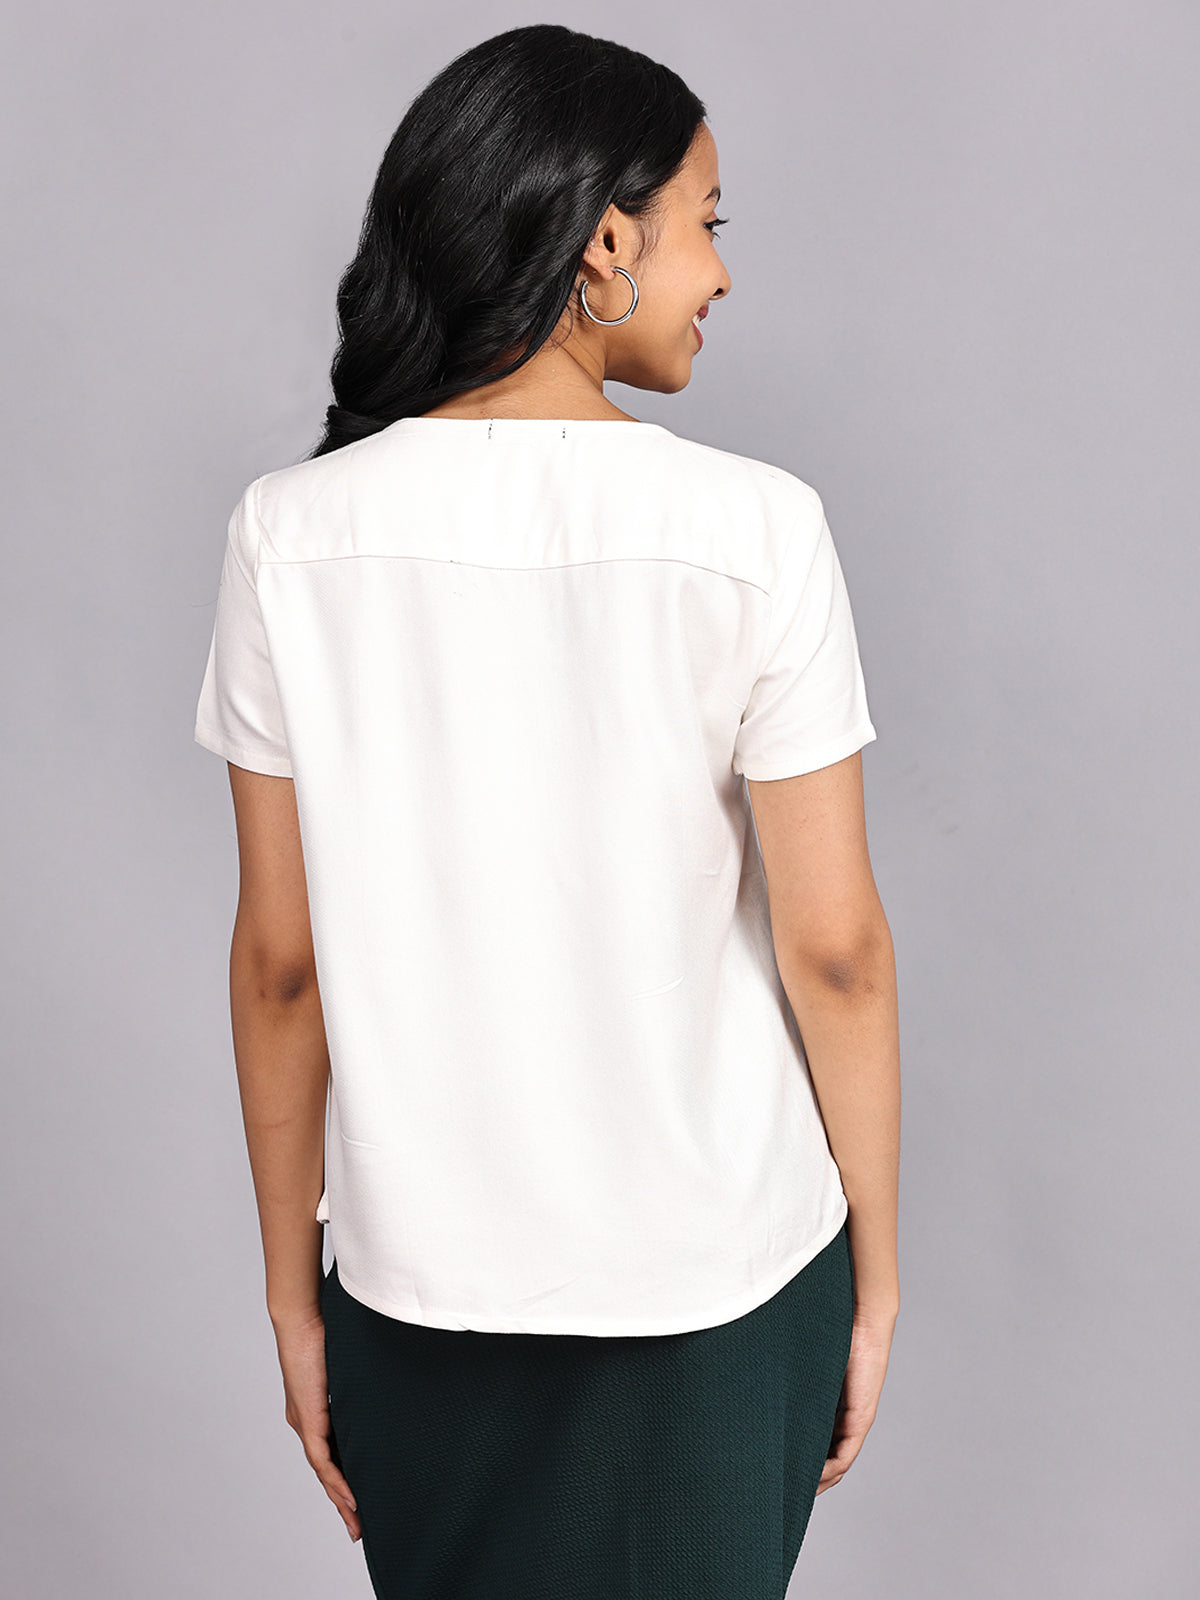 Find White Half Sleeve Rayon Top Online